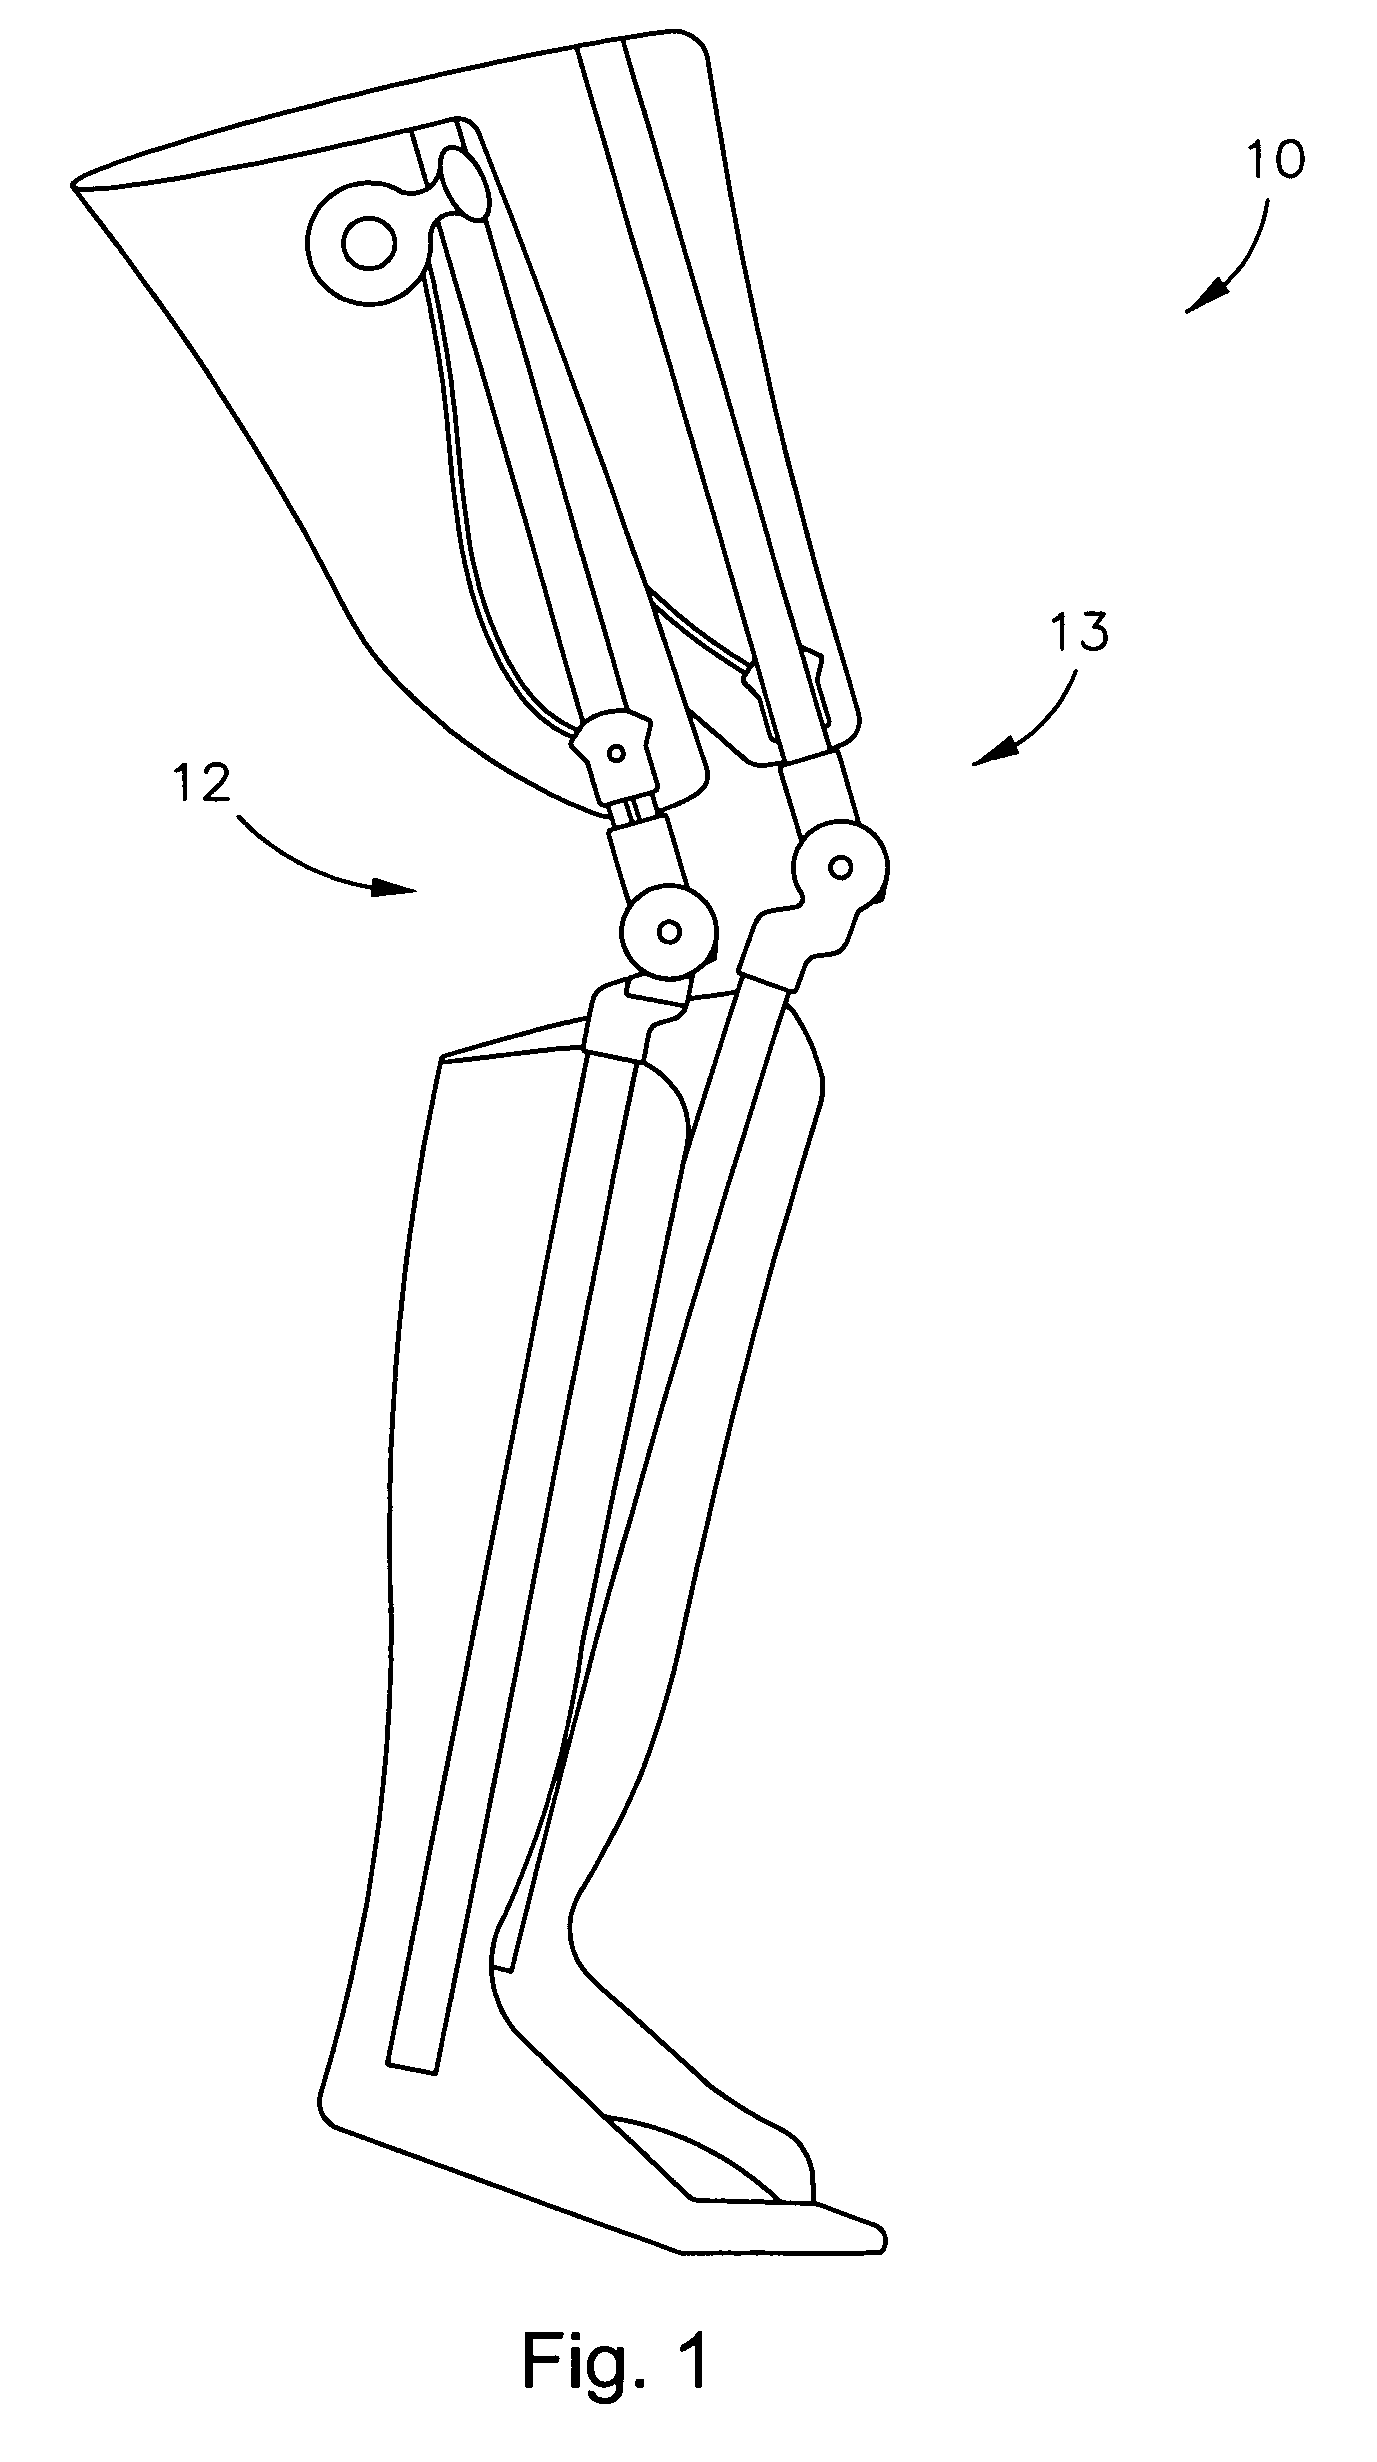 Ambulating knee joint